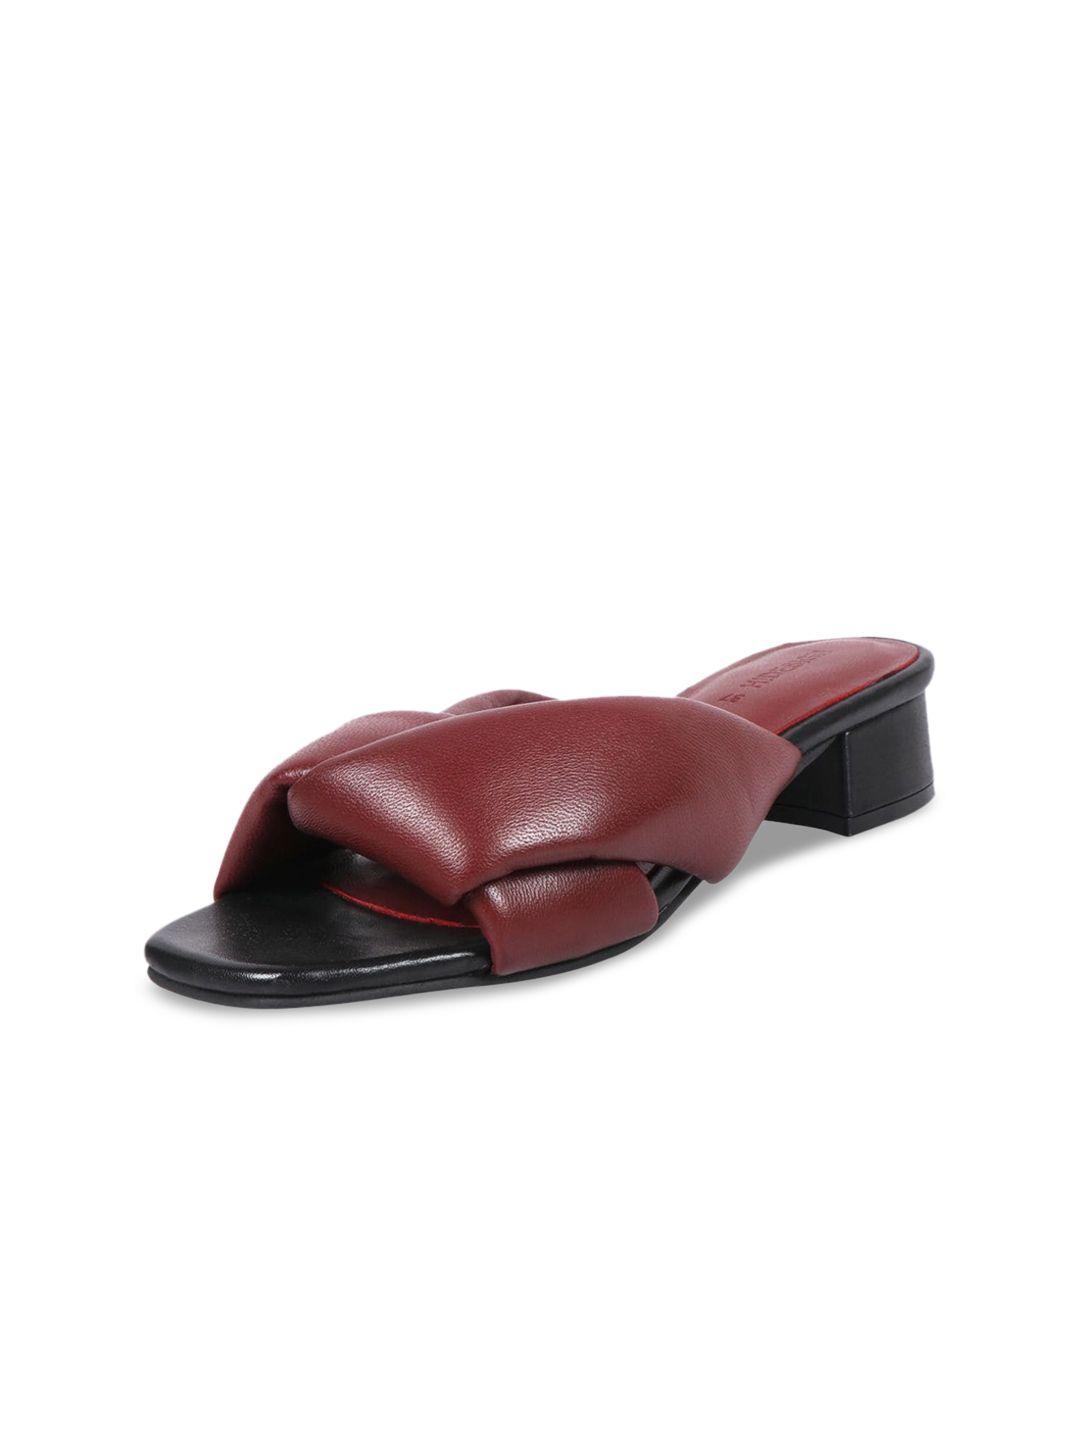 hidesign lille leather open toe block heels